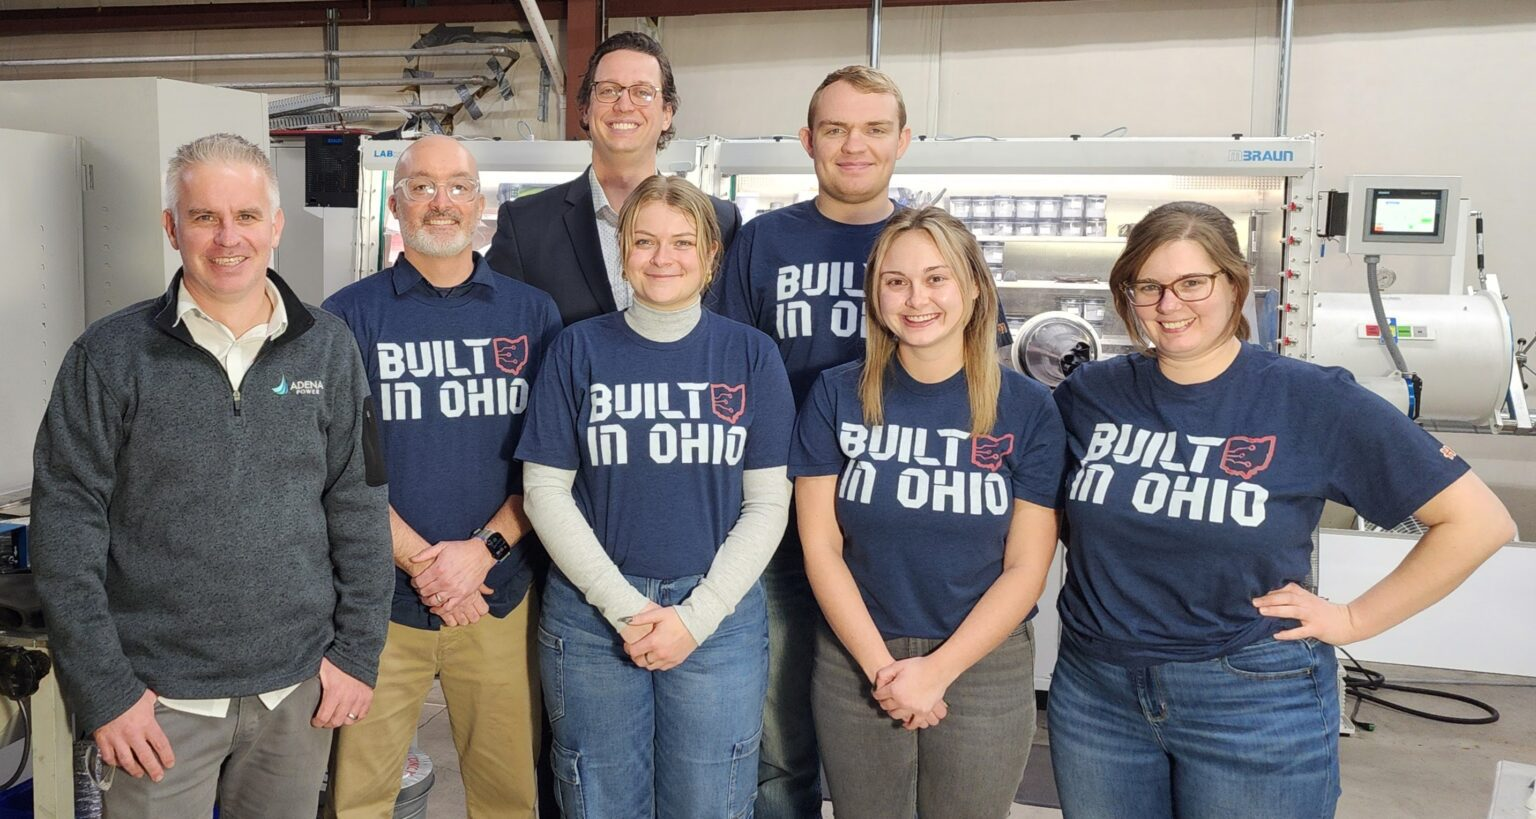 Adena Power's team wearing "Built in Ohio" t-shirts